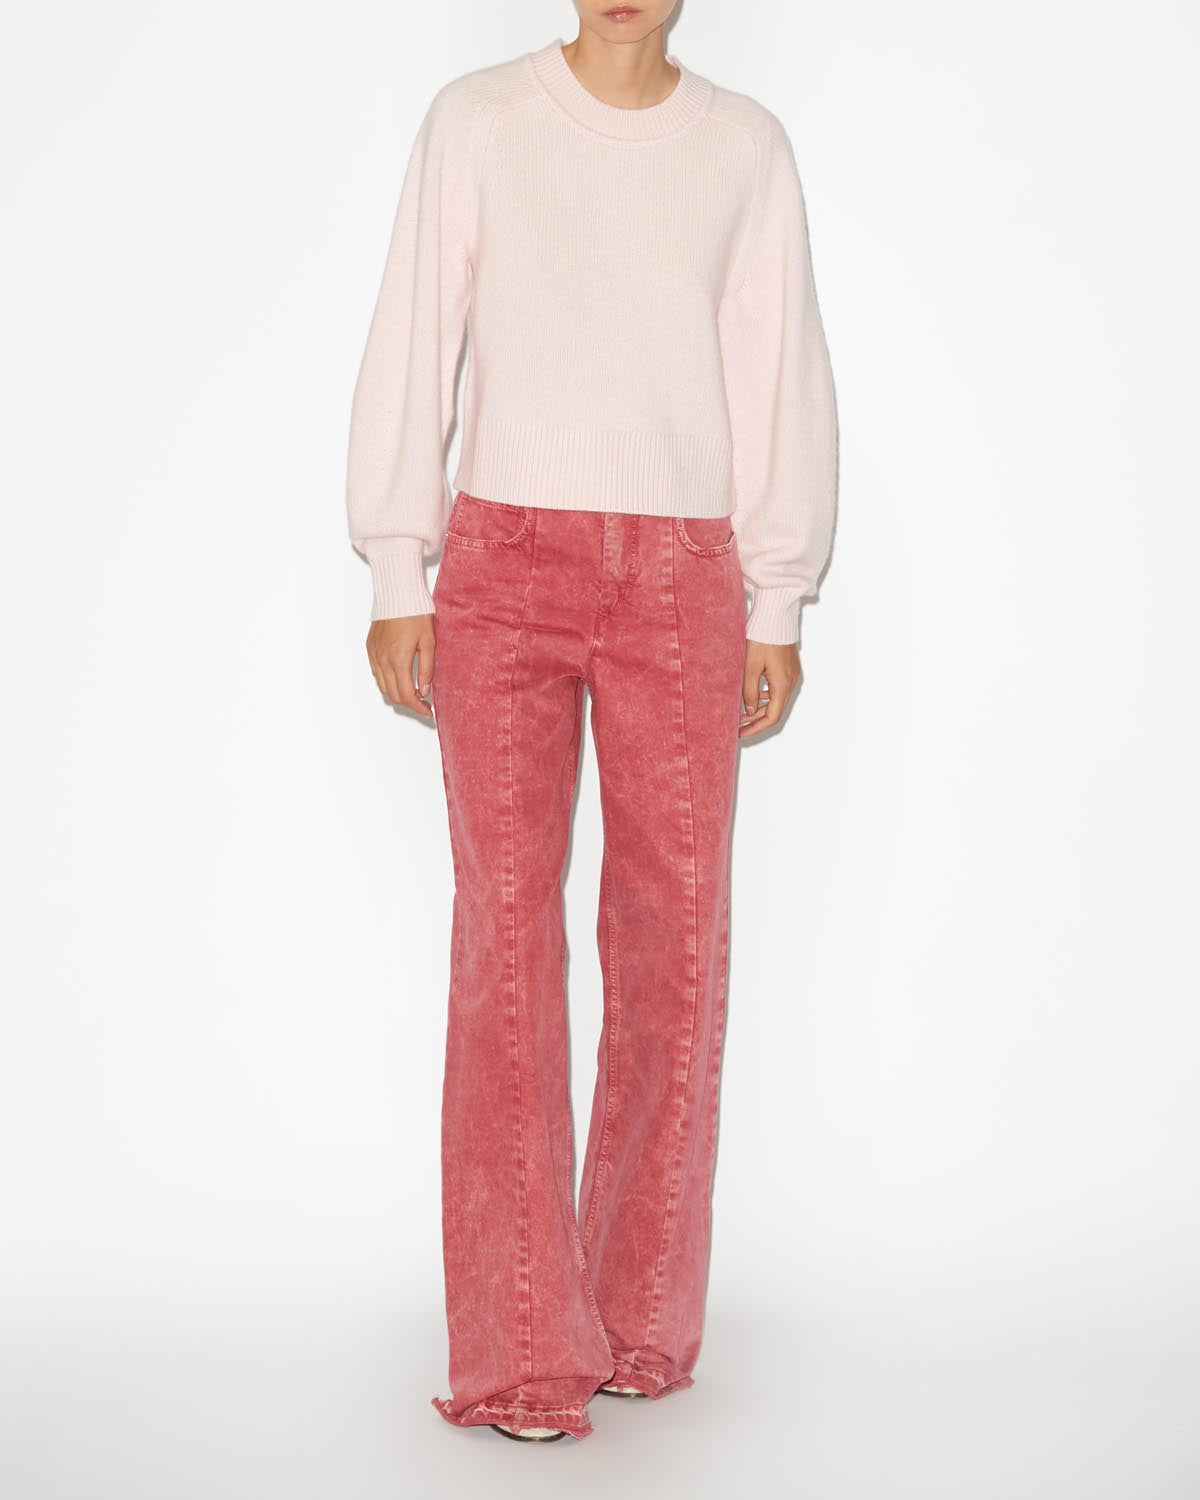 Leandra セーター Woman Light pink 4